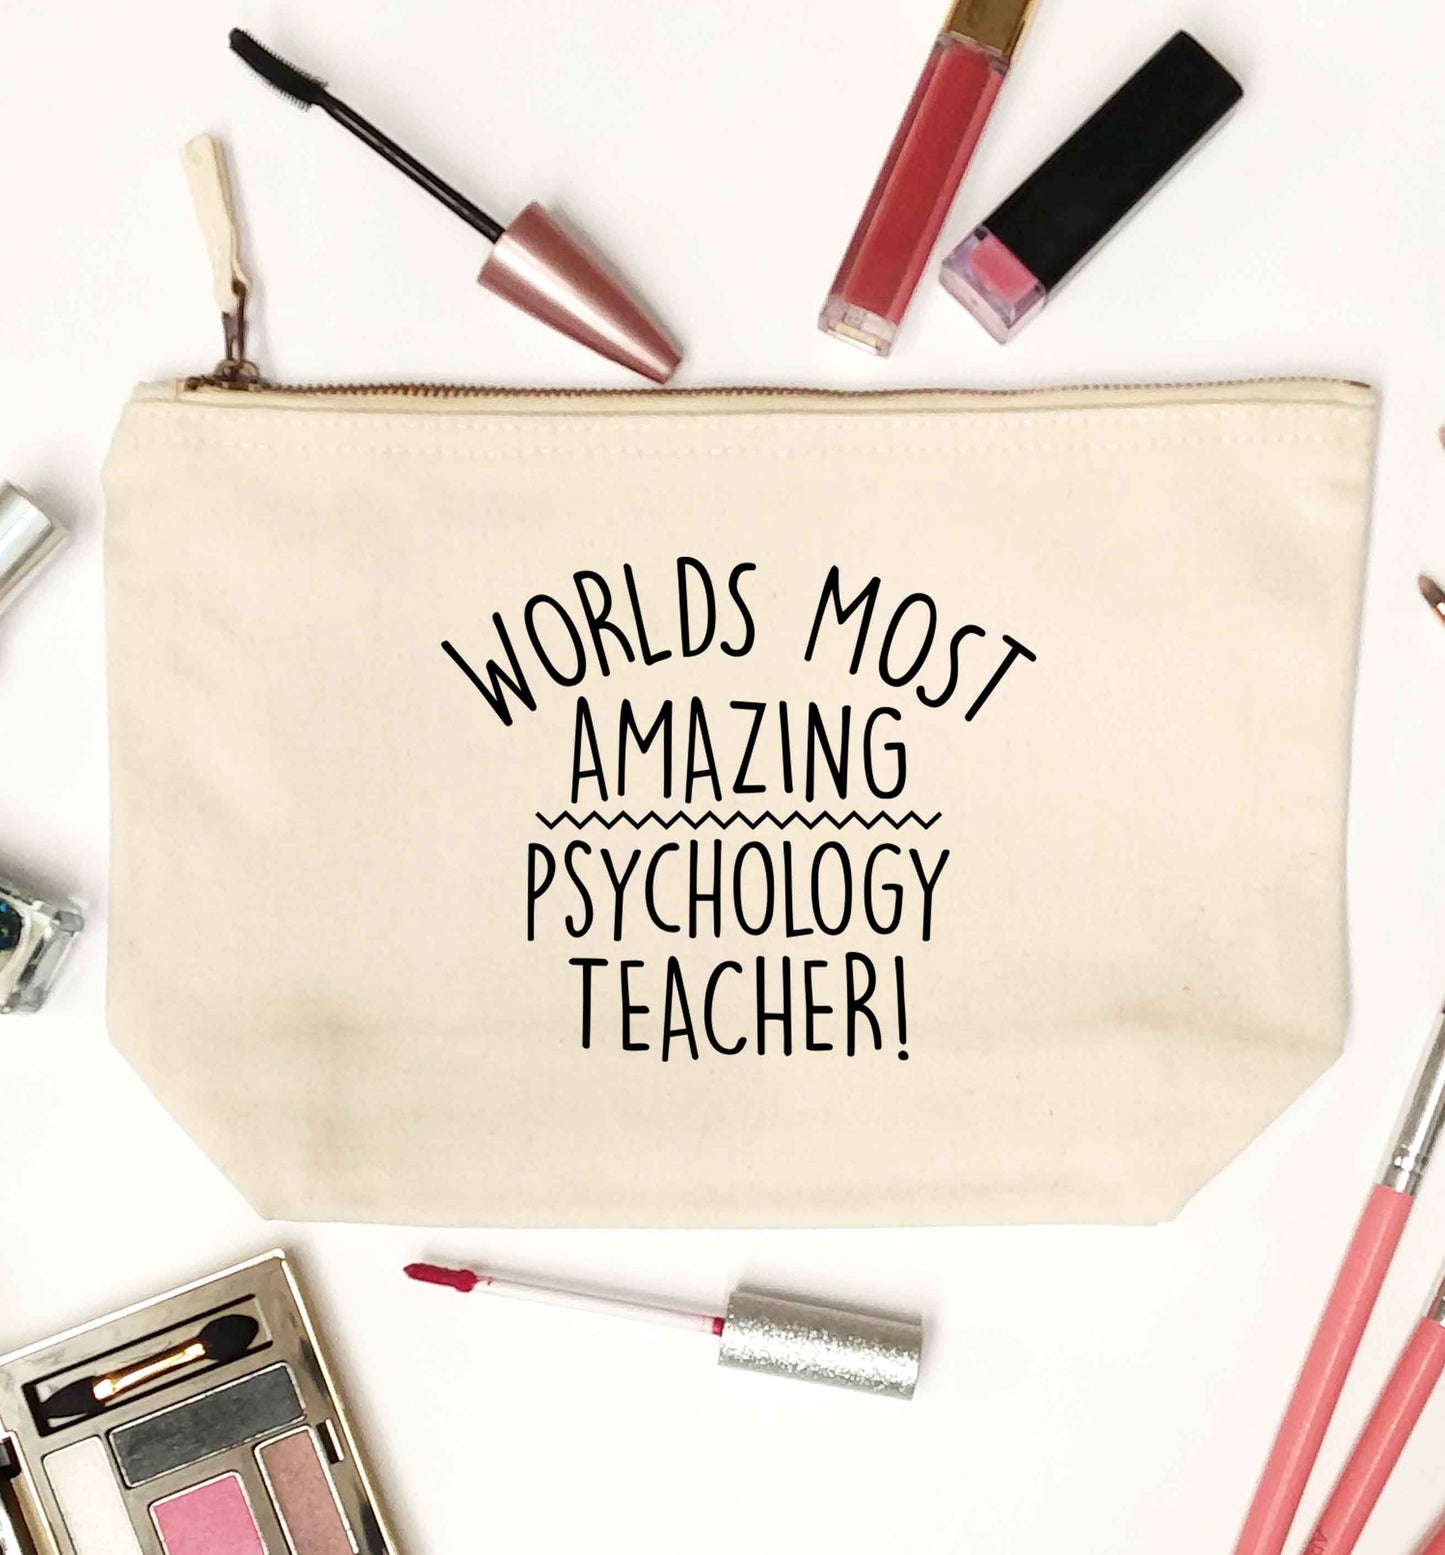 Worlds most amazing psychology teacher natural makeup bag